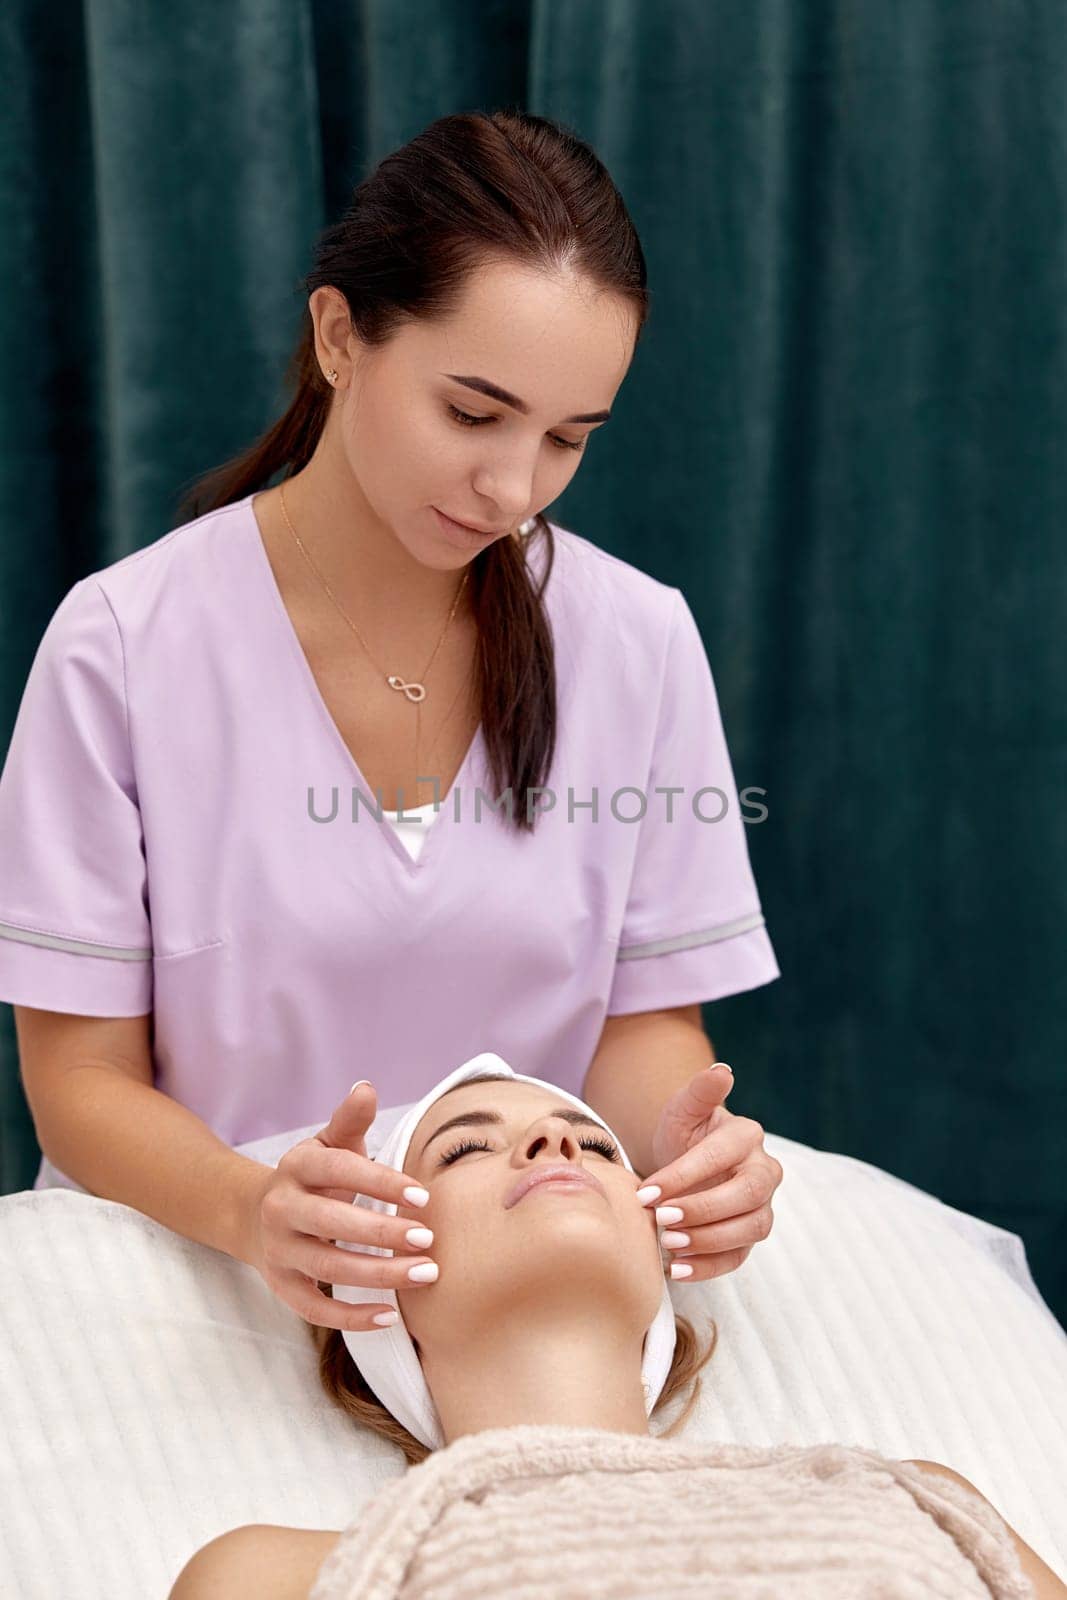 Beautiful woman getting face massage treatment in beauty salon. Skin care.